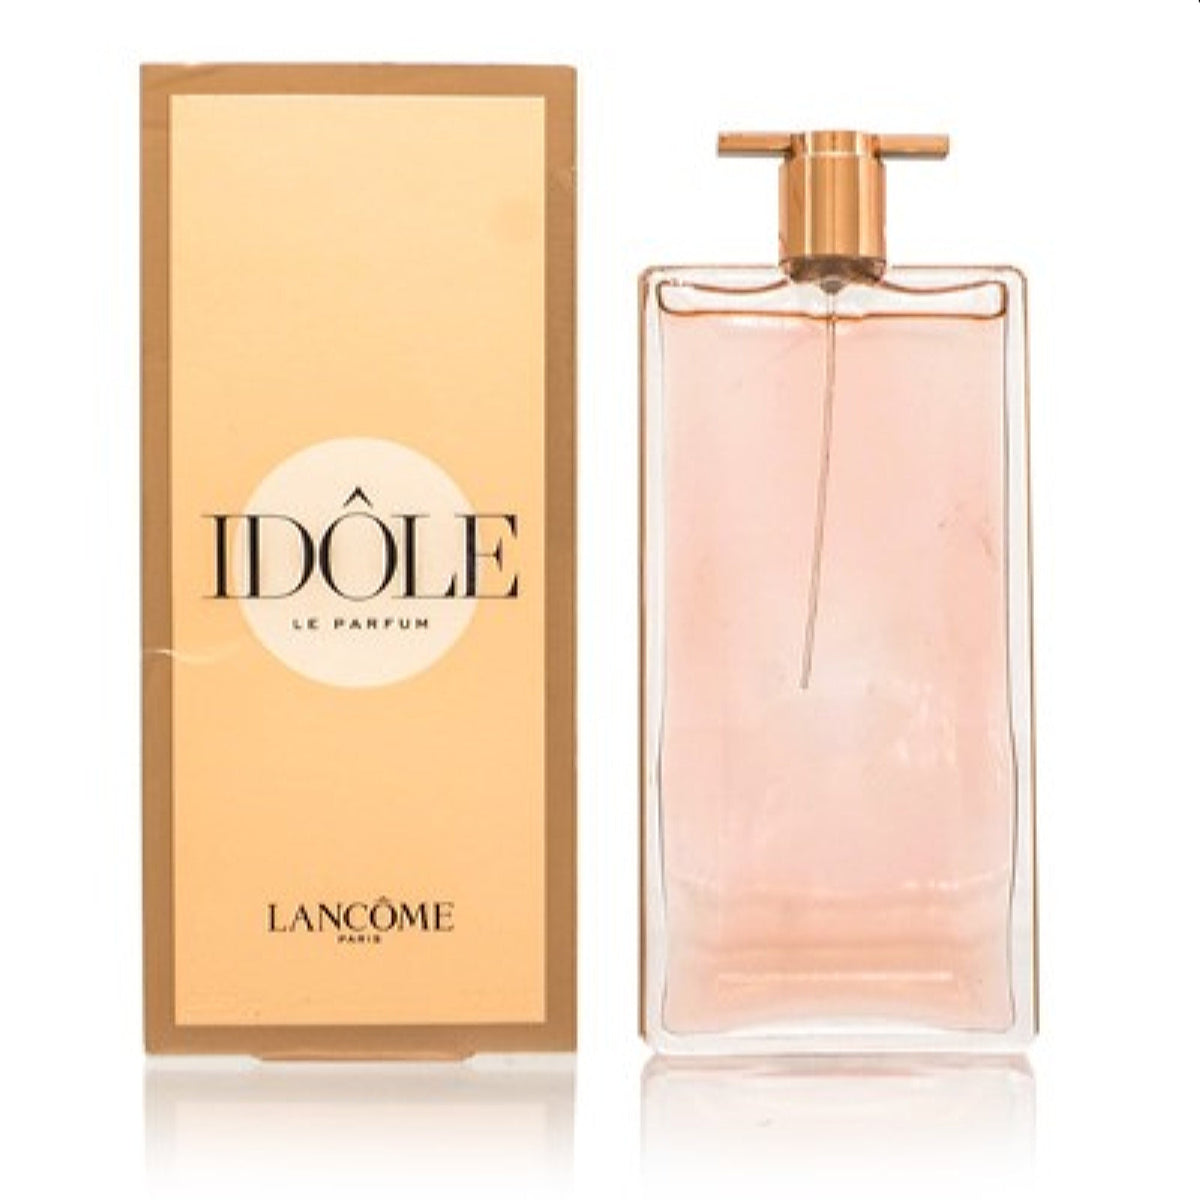 Idole Lancome Edp Spray 1.7 Oz (50 Ml) For Women   